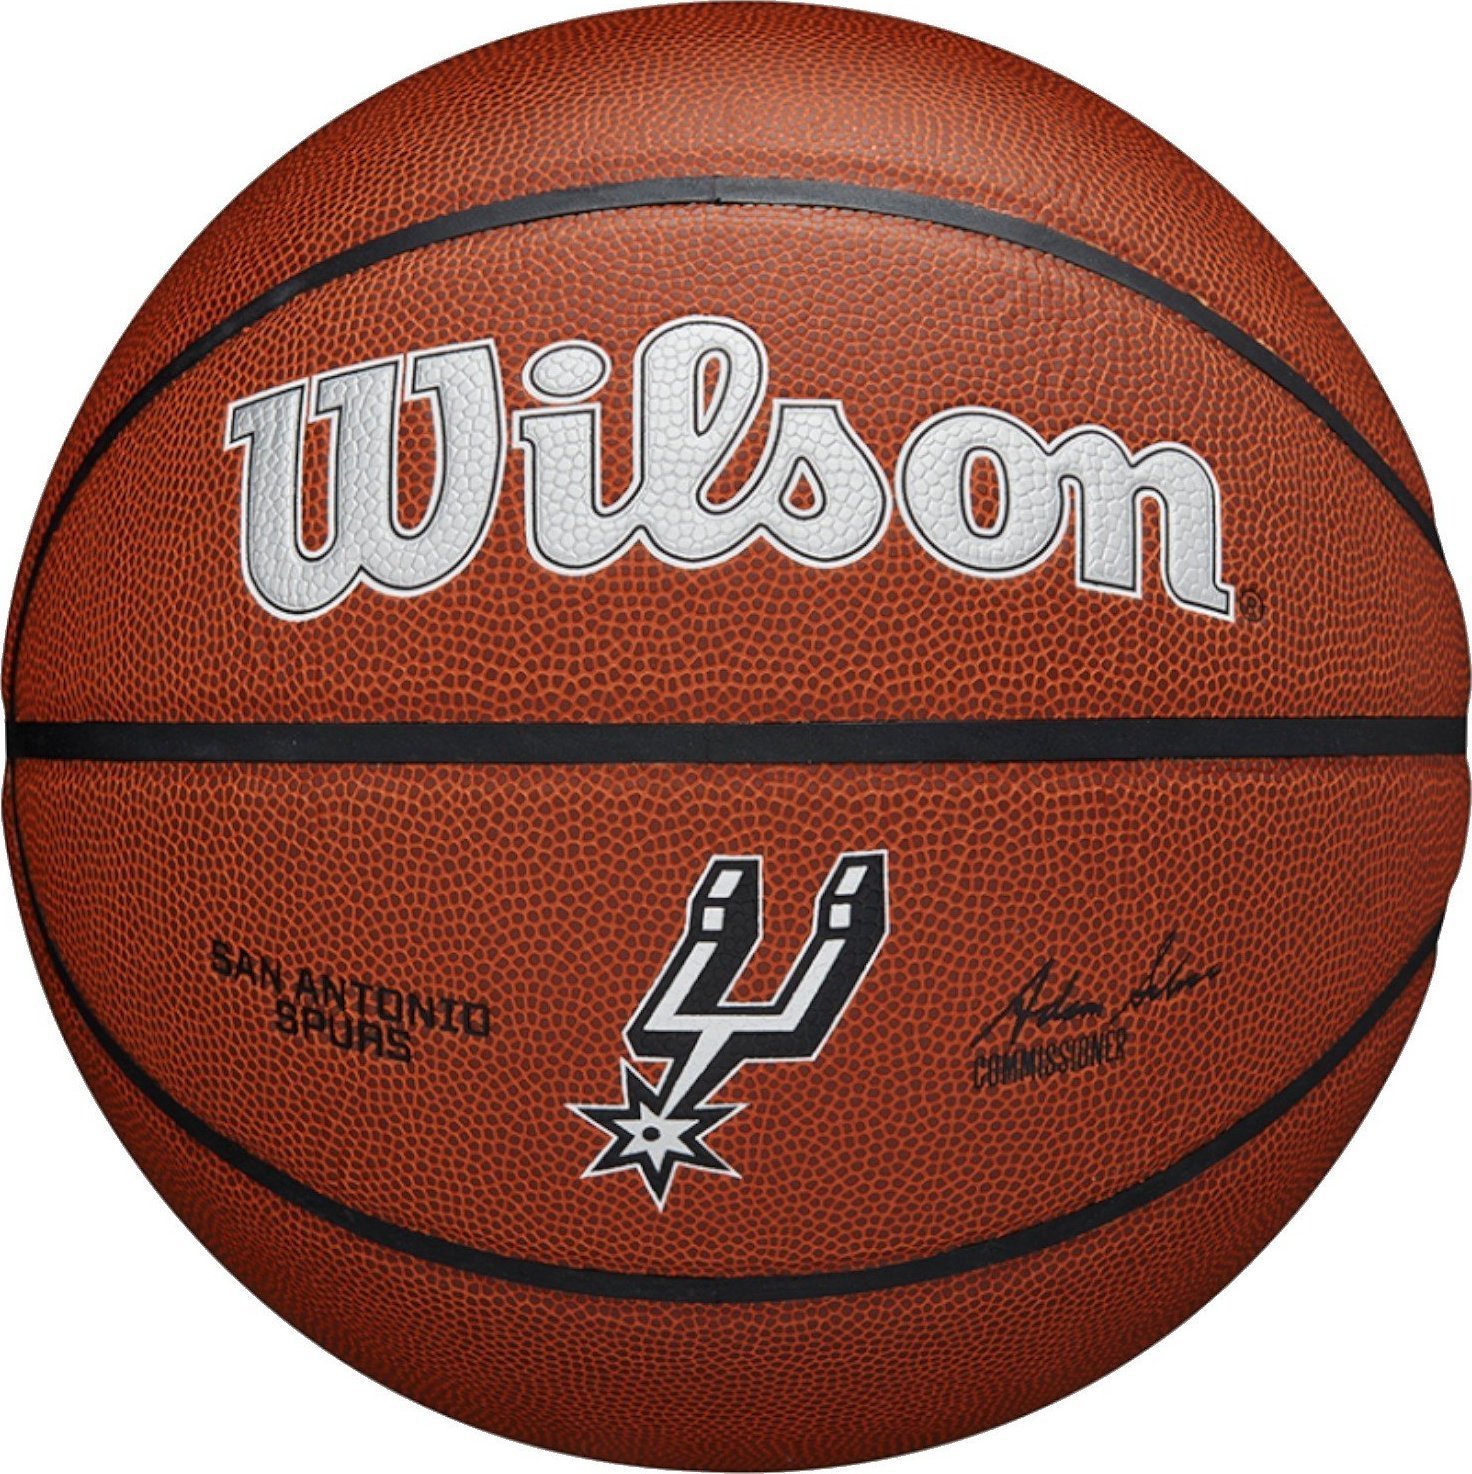 Minge baschet Wilson NBA Team Alliance San Antonio Spurs, marime 7